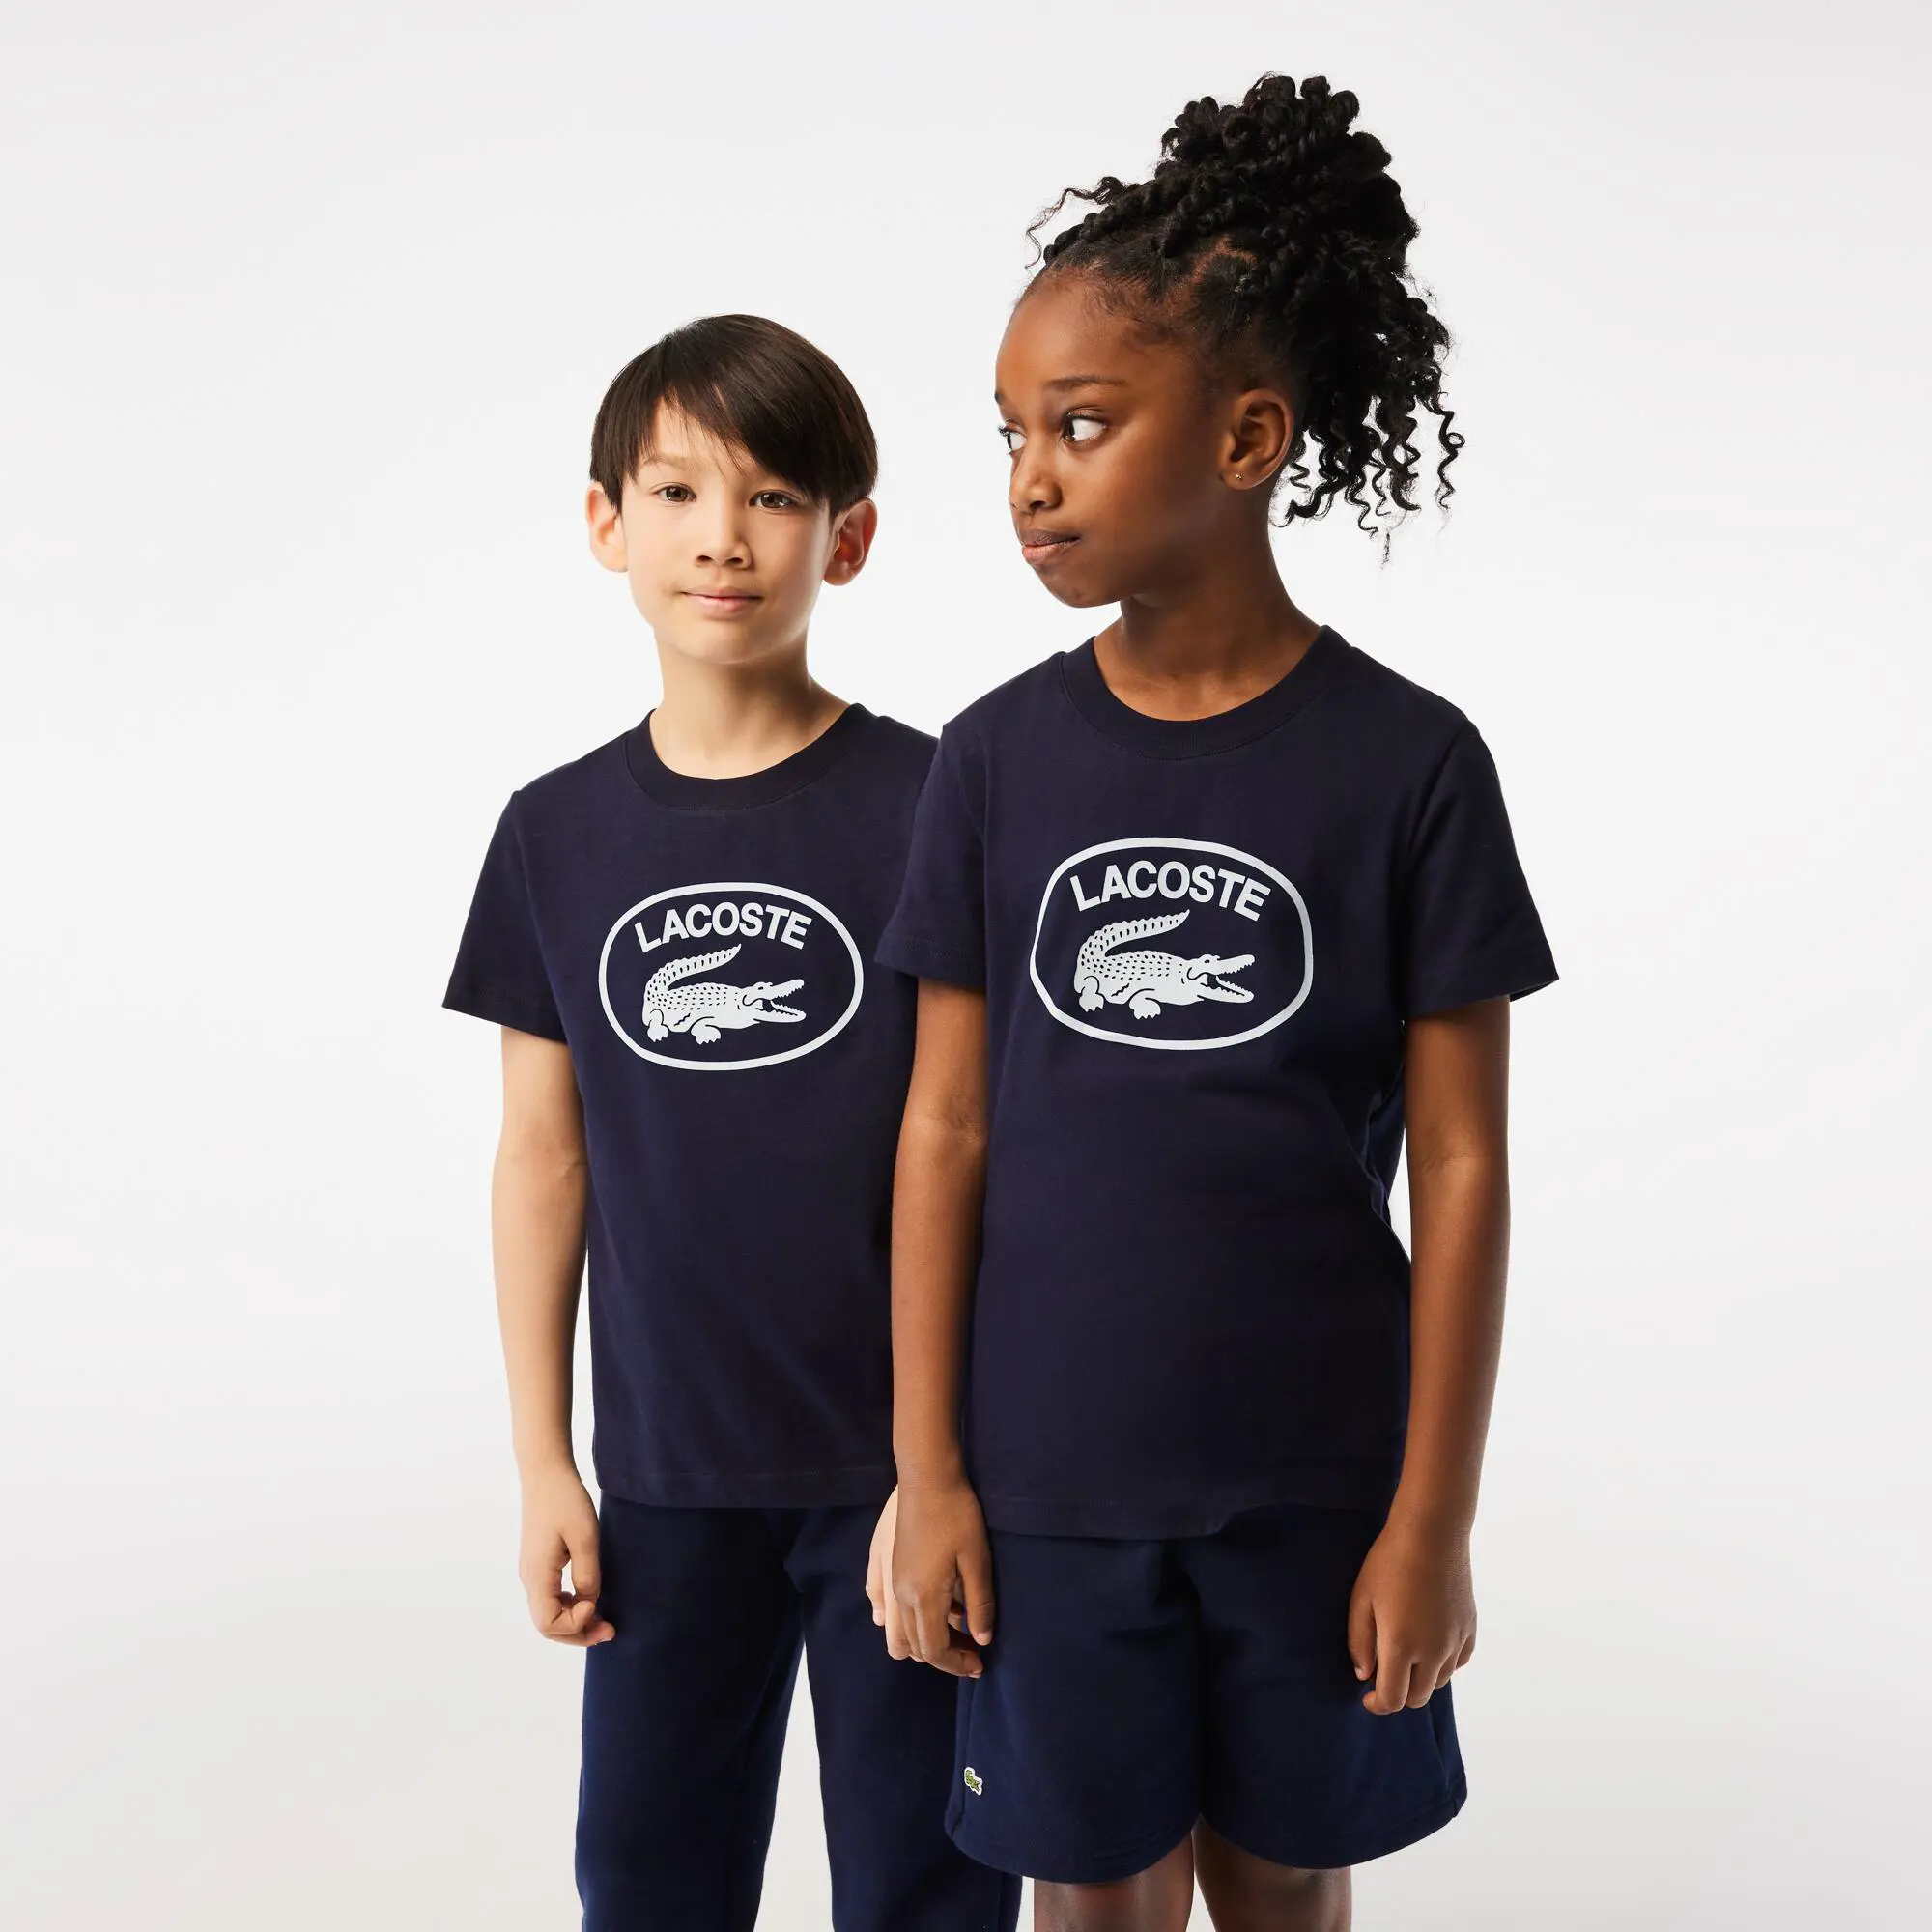 Lacoste Kids' Lacoste Contrast Branded Cotton Jersey T-shirt. 1